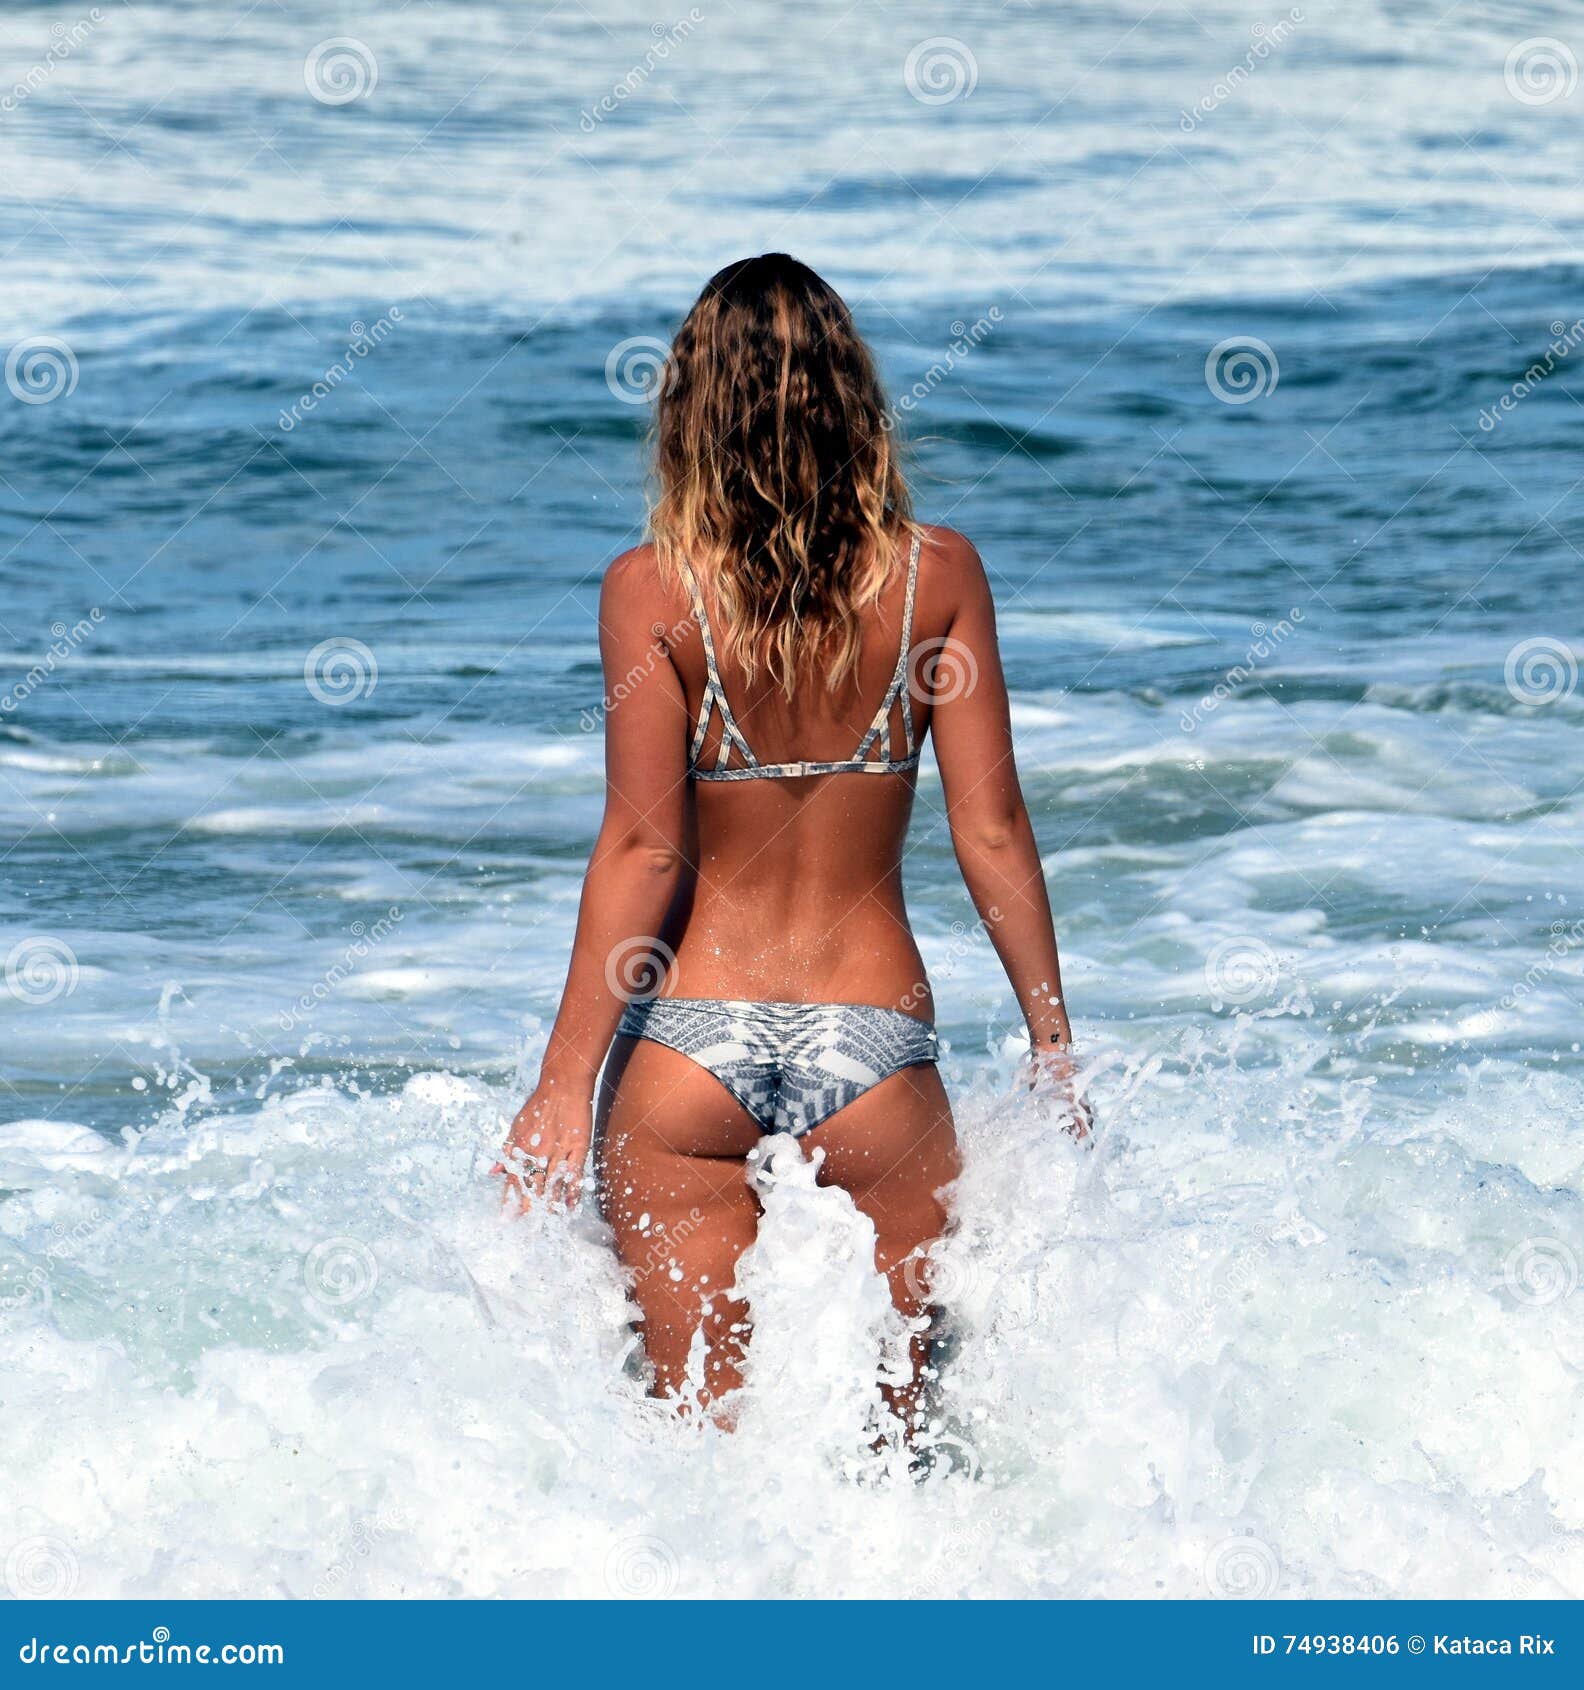 amateur beach hot babe pics nude